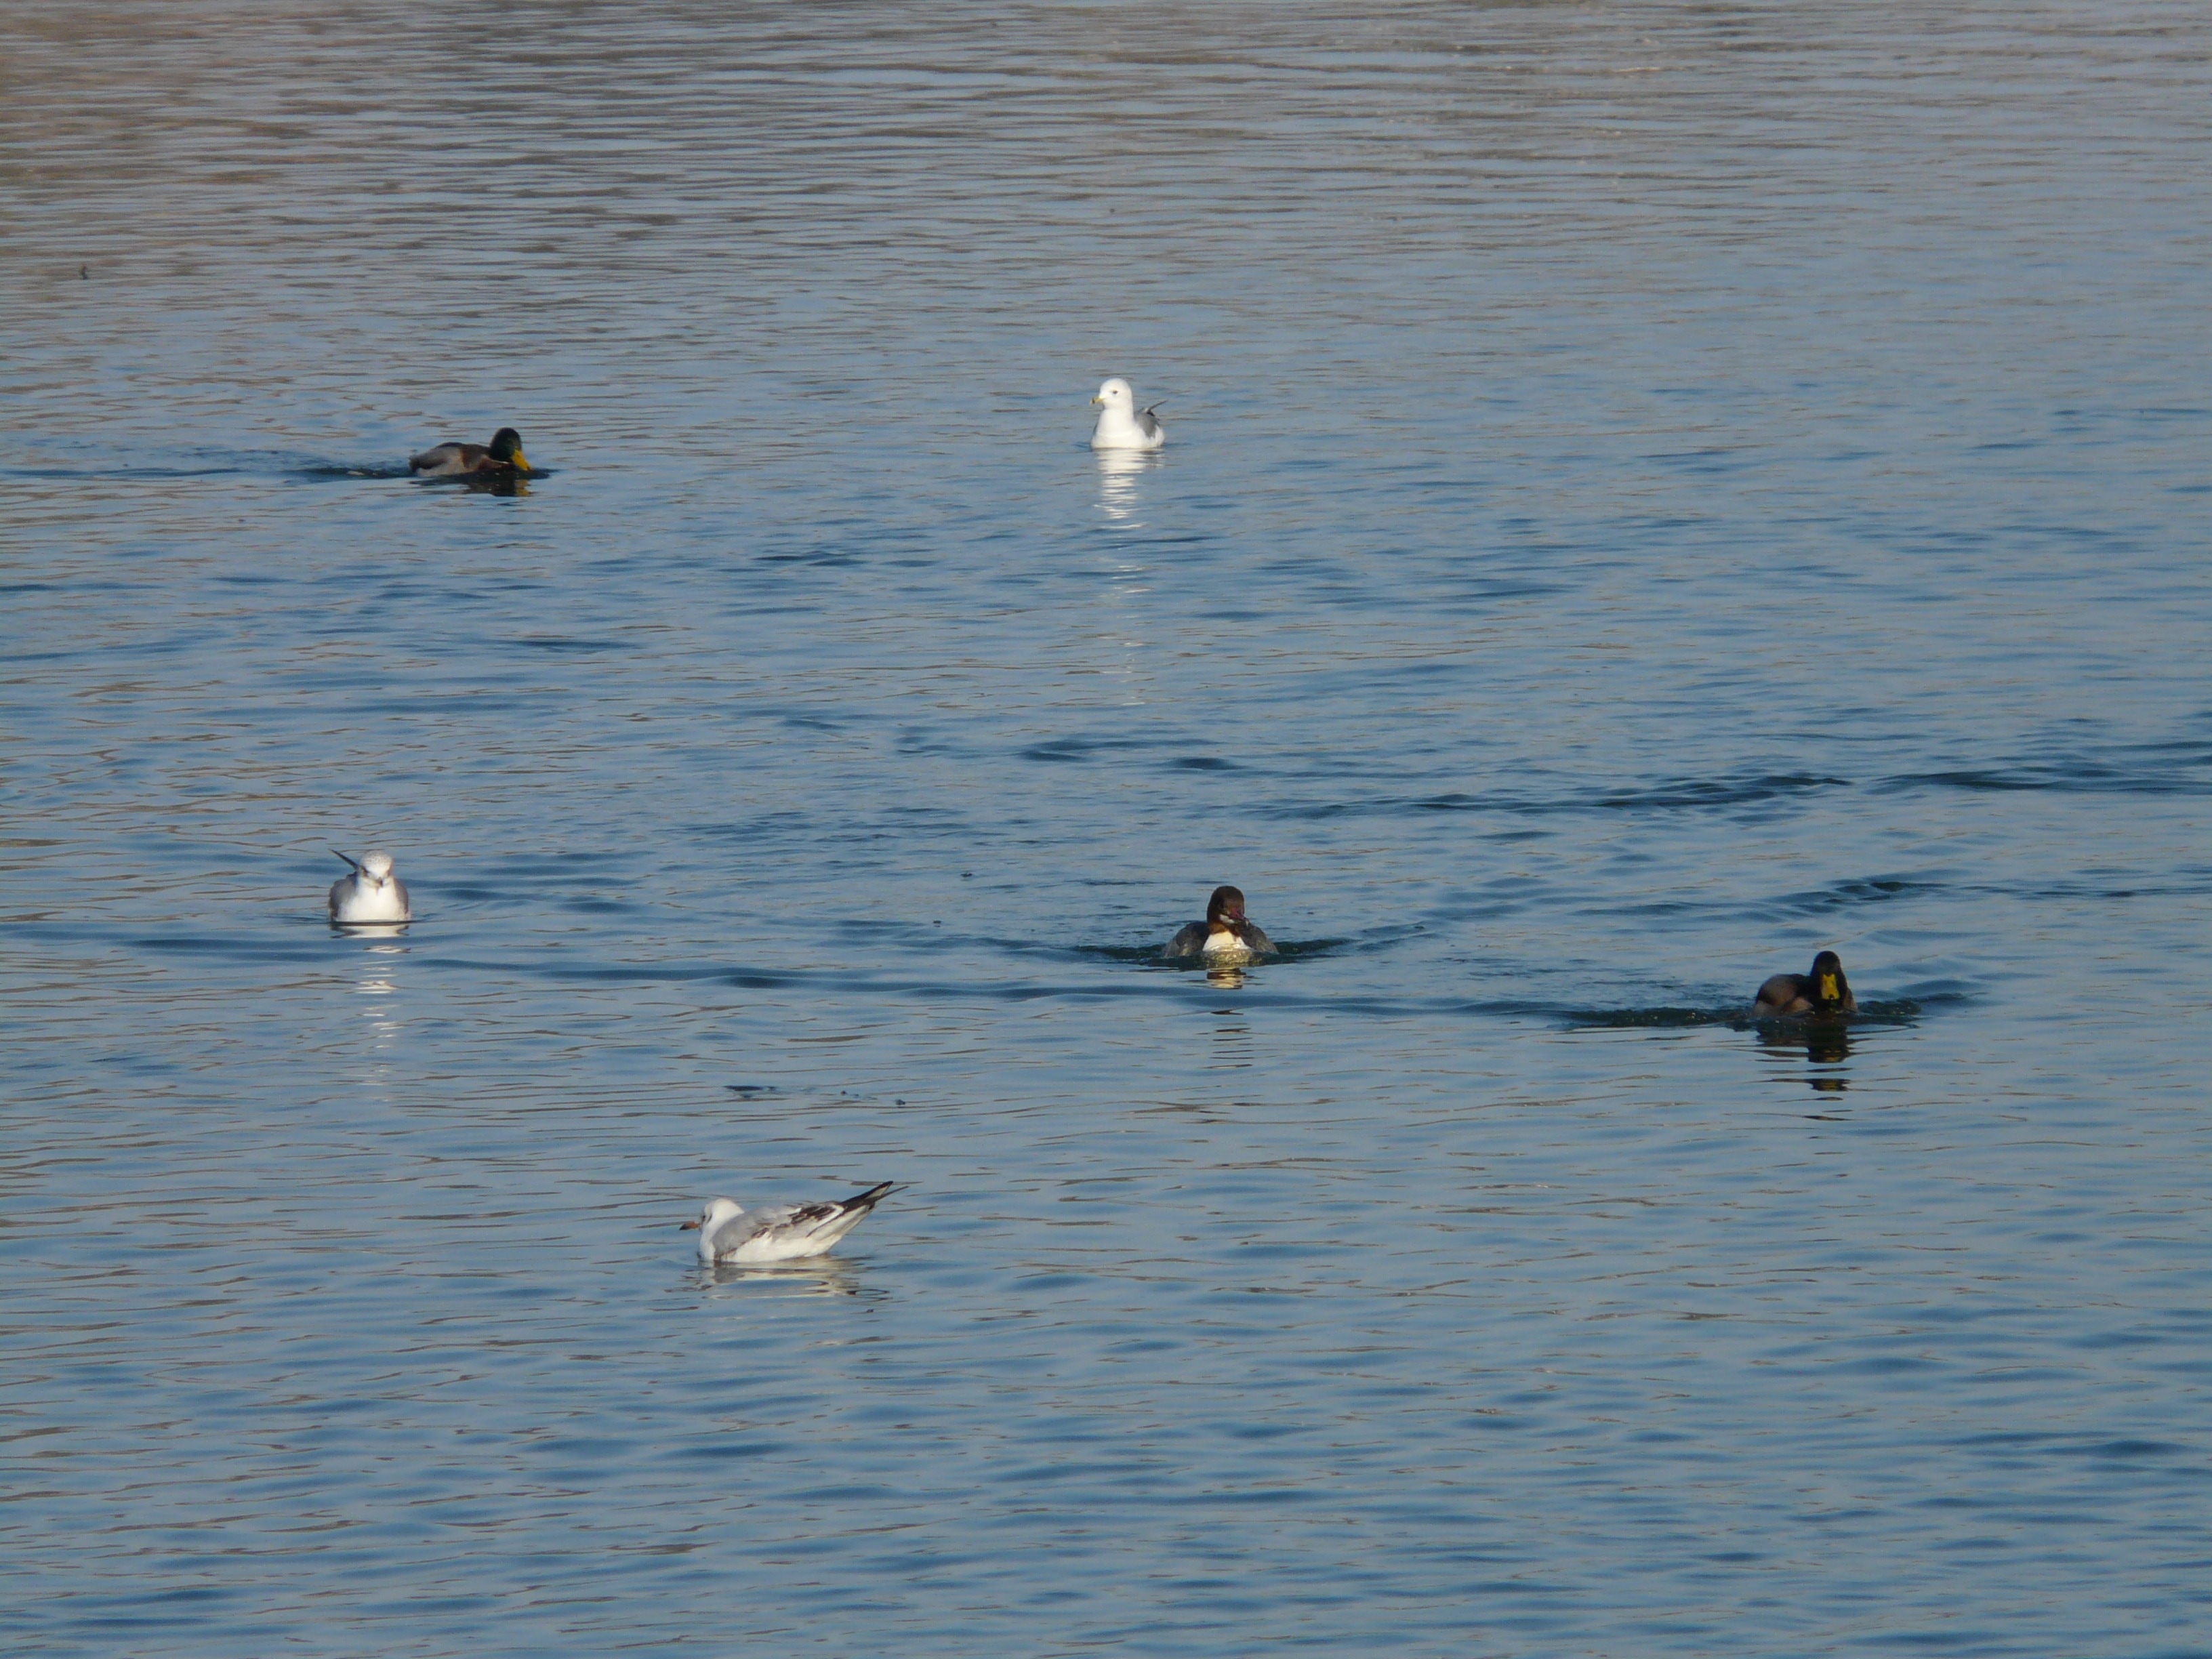 6 white and black ducks